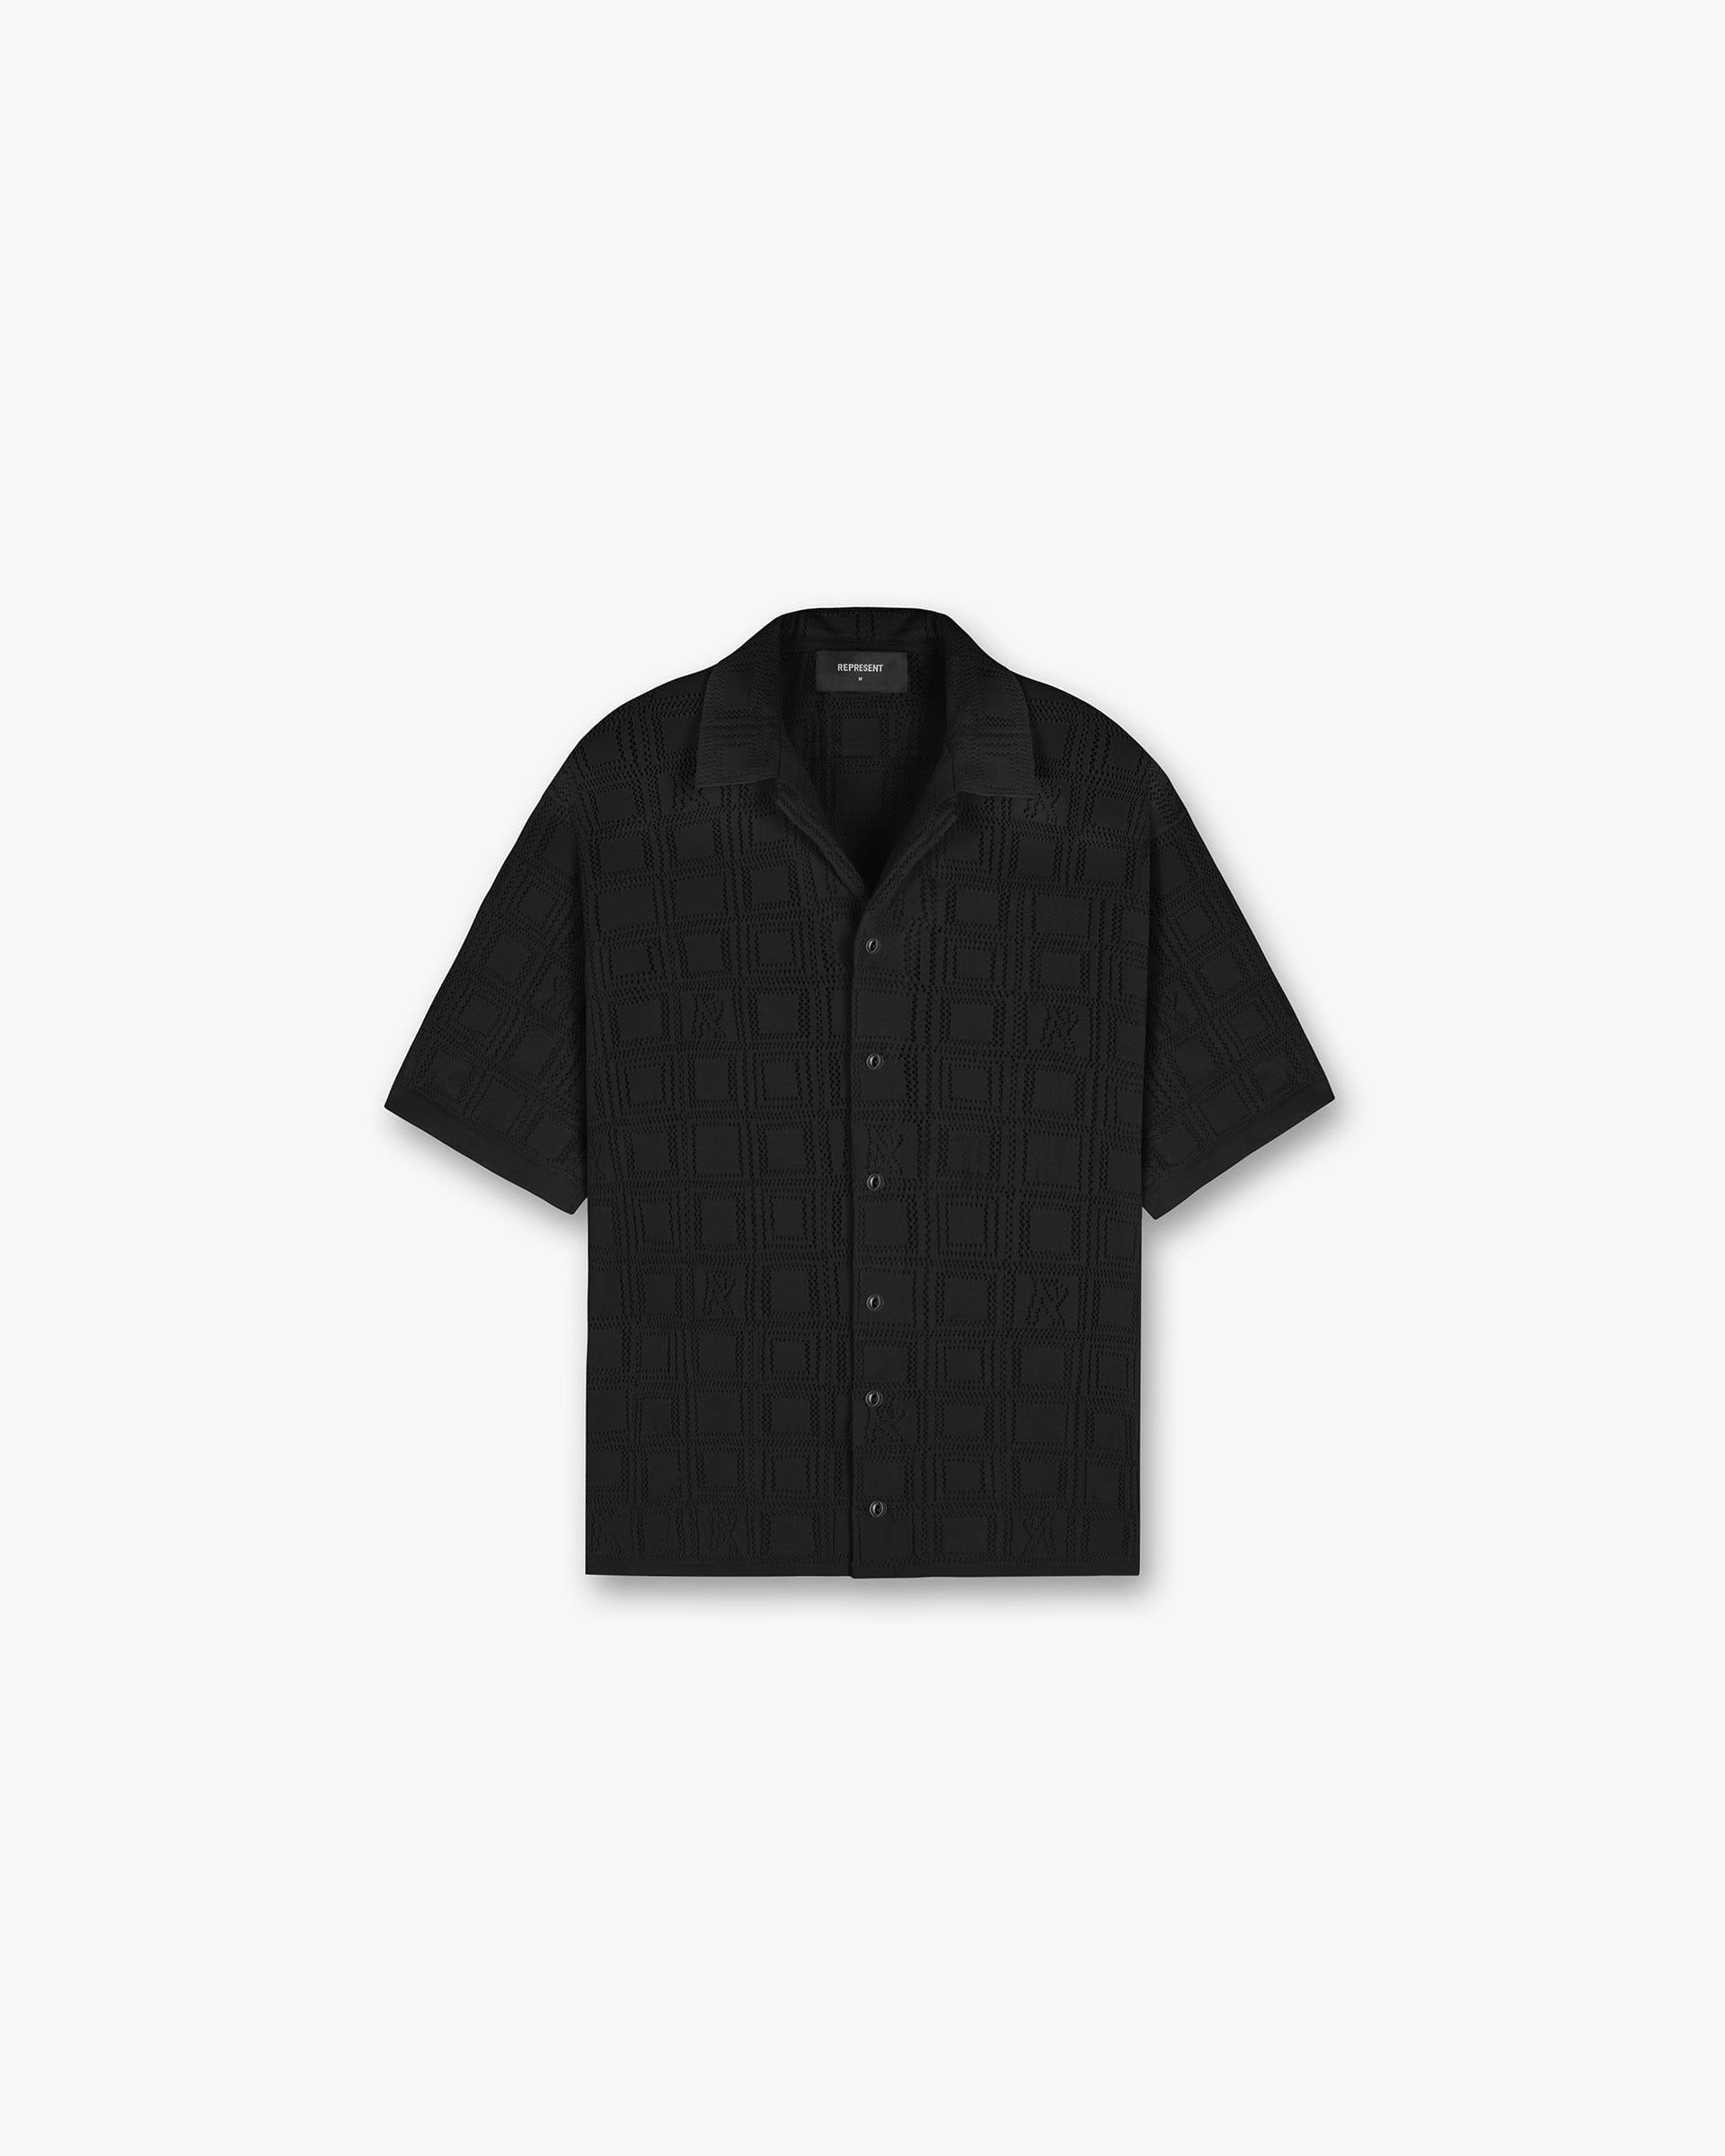 Lace Knit Shirt - Black